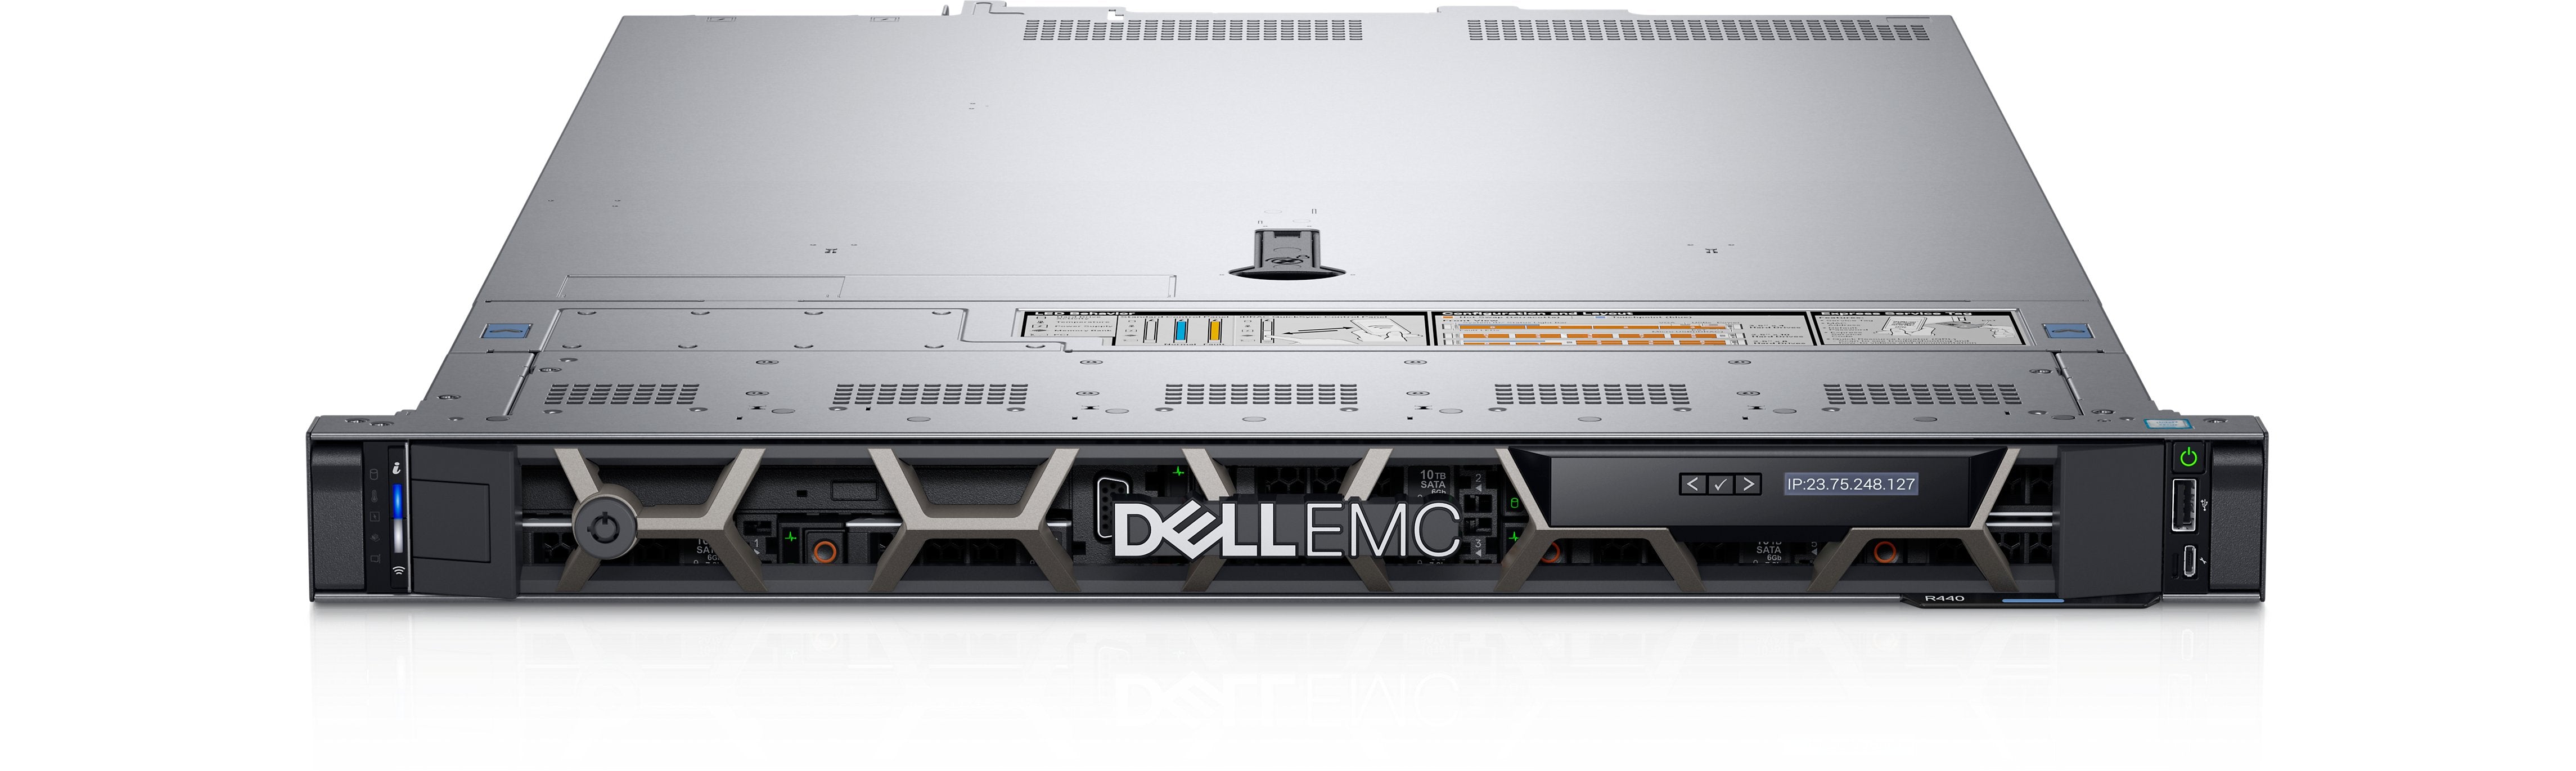 Dell PowerEdge R440 Rack Server - Benson Computers